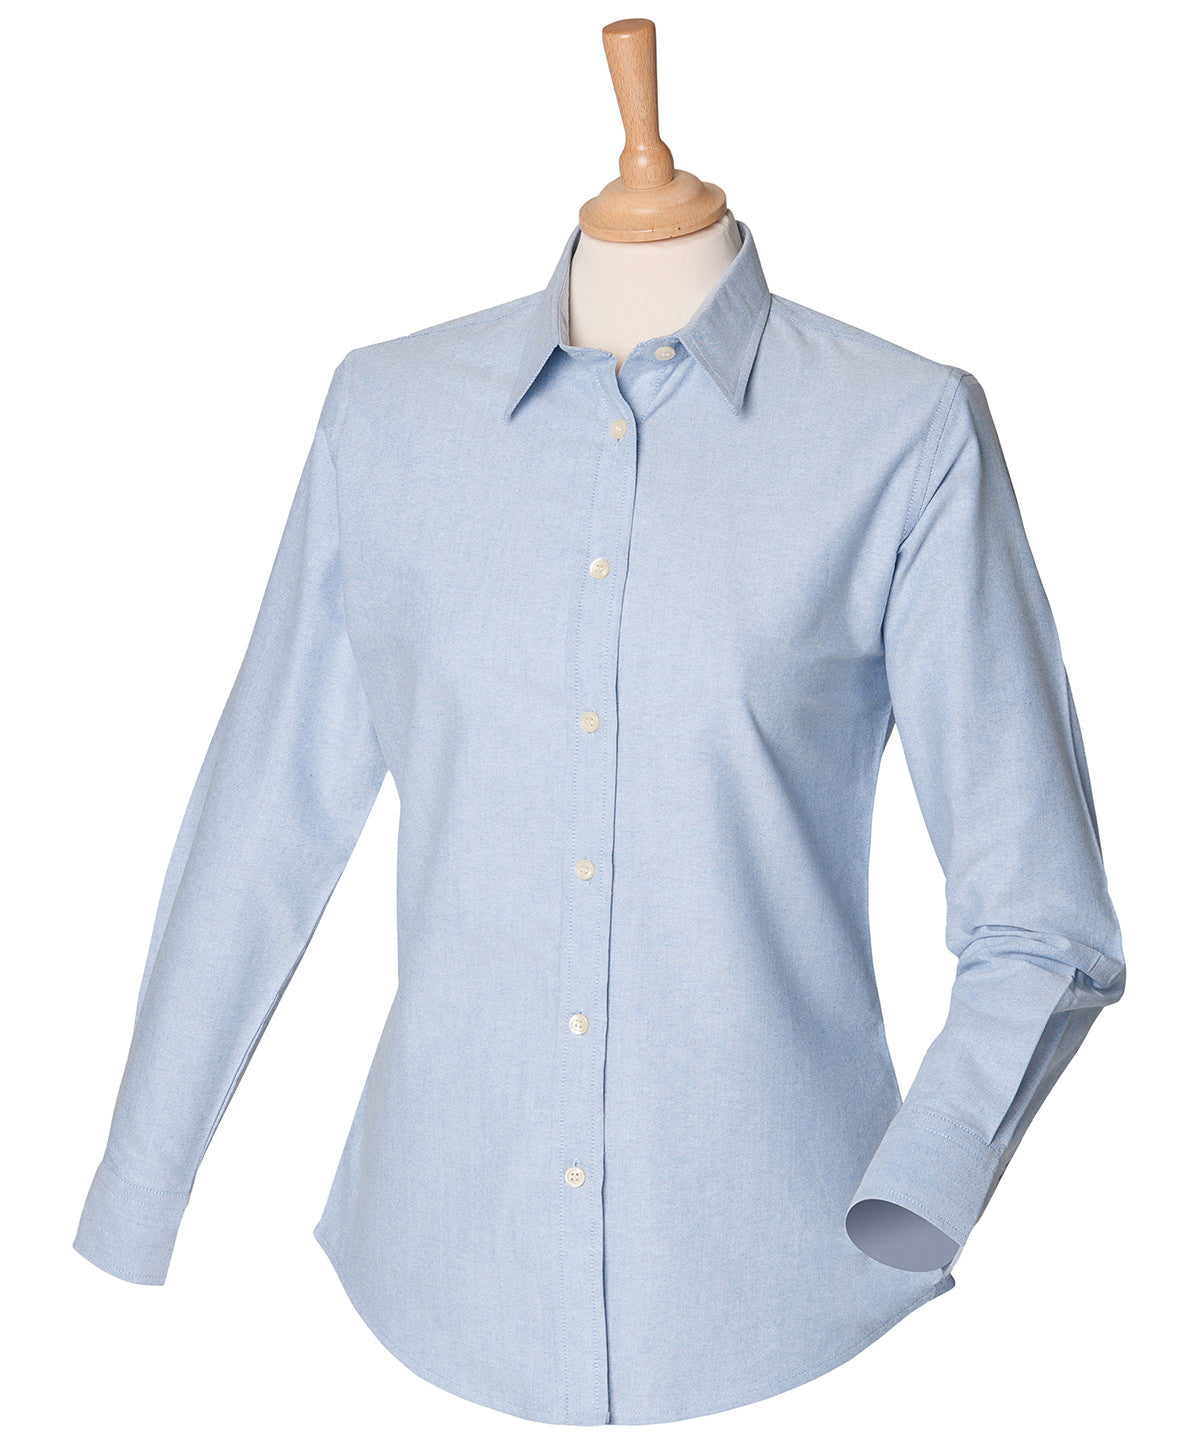 Bolir - Women's Classic Long Sleeve Oxford Shirt